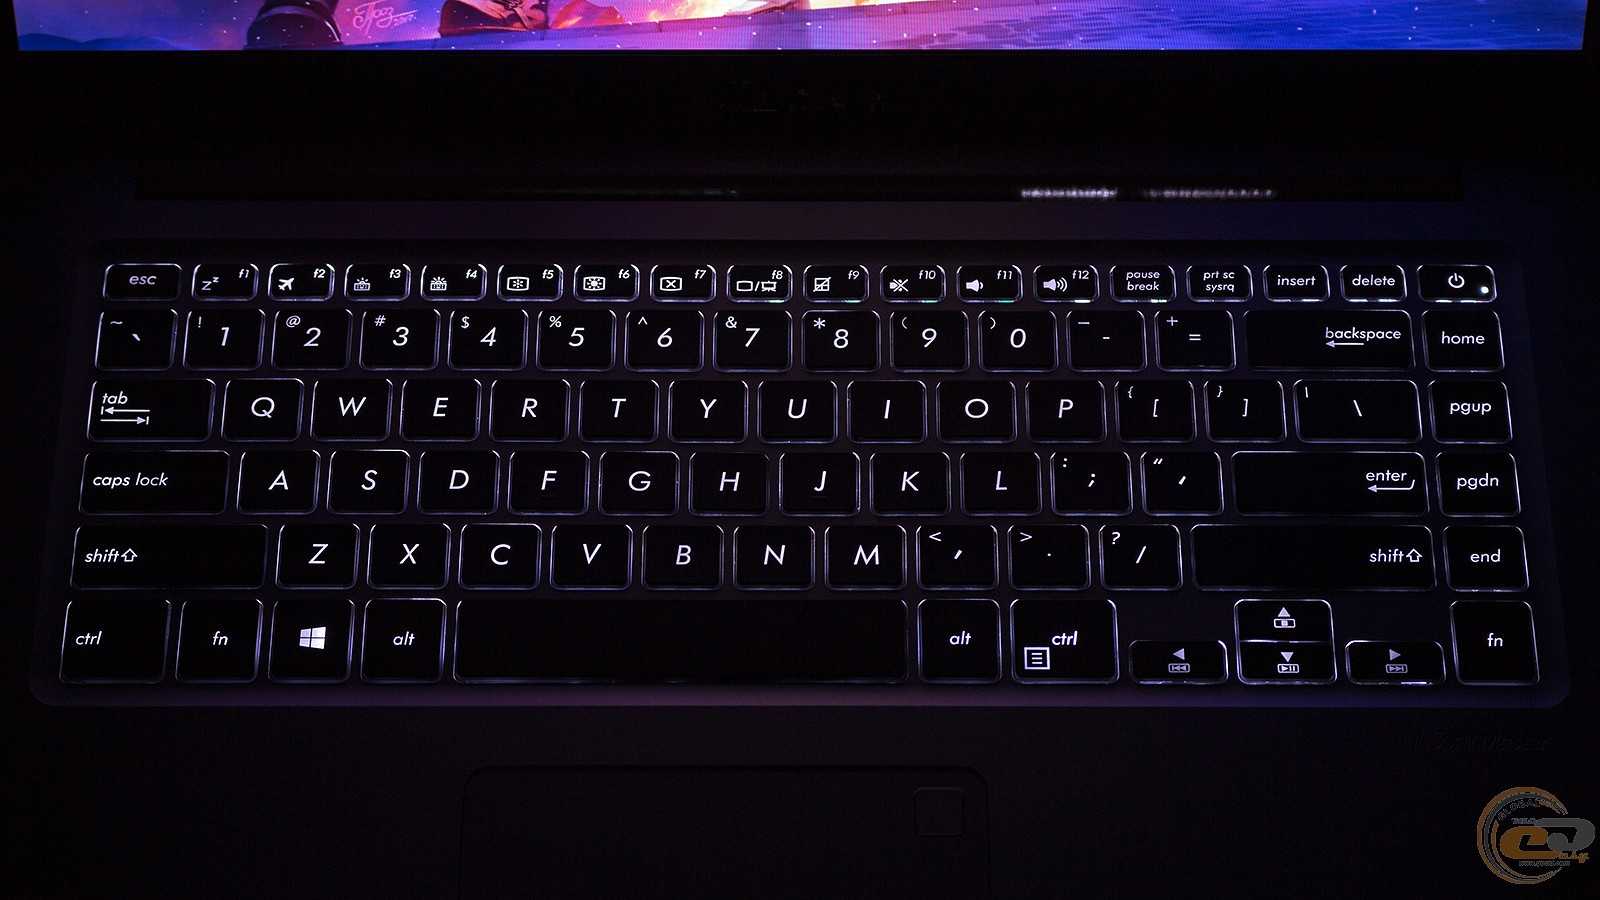 Asus vivobook включить подсветку клавиатуры. ASUS VIVOBOOK 15 клавиатура. ASUS n751j подсветка клавиатуры. ASUS VIVOBOOK подсветка клавиатуры. Клавиатура с подсветкой на ASUS x53s.